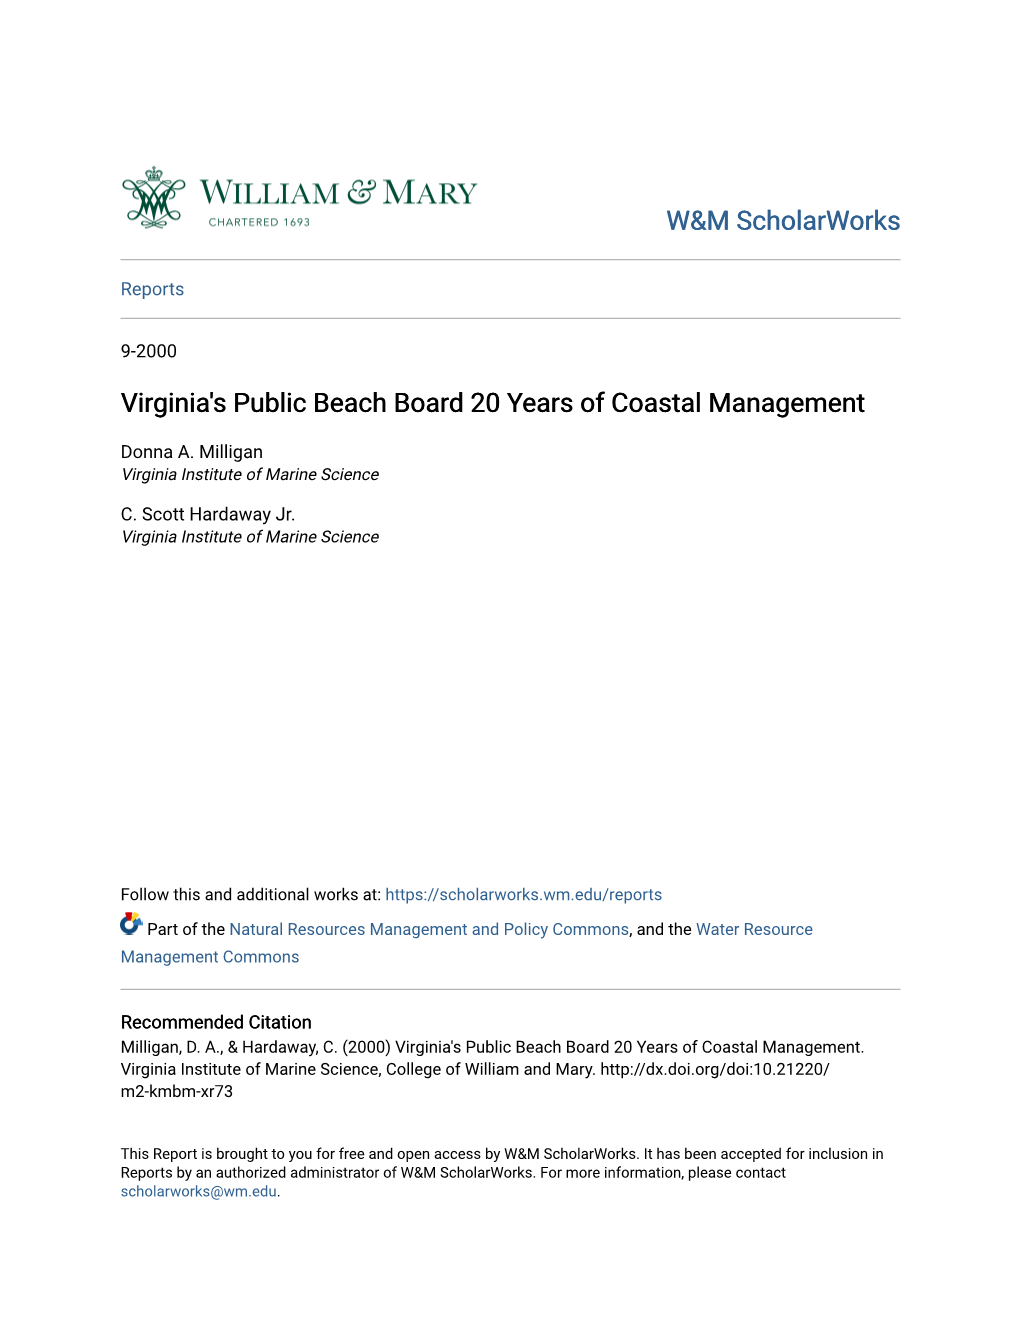 Virginia's Public Beach Board 20 Years of Coastal Management